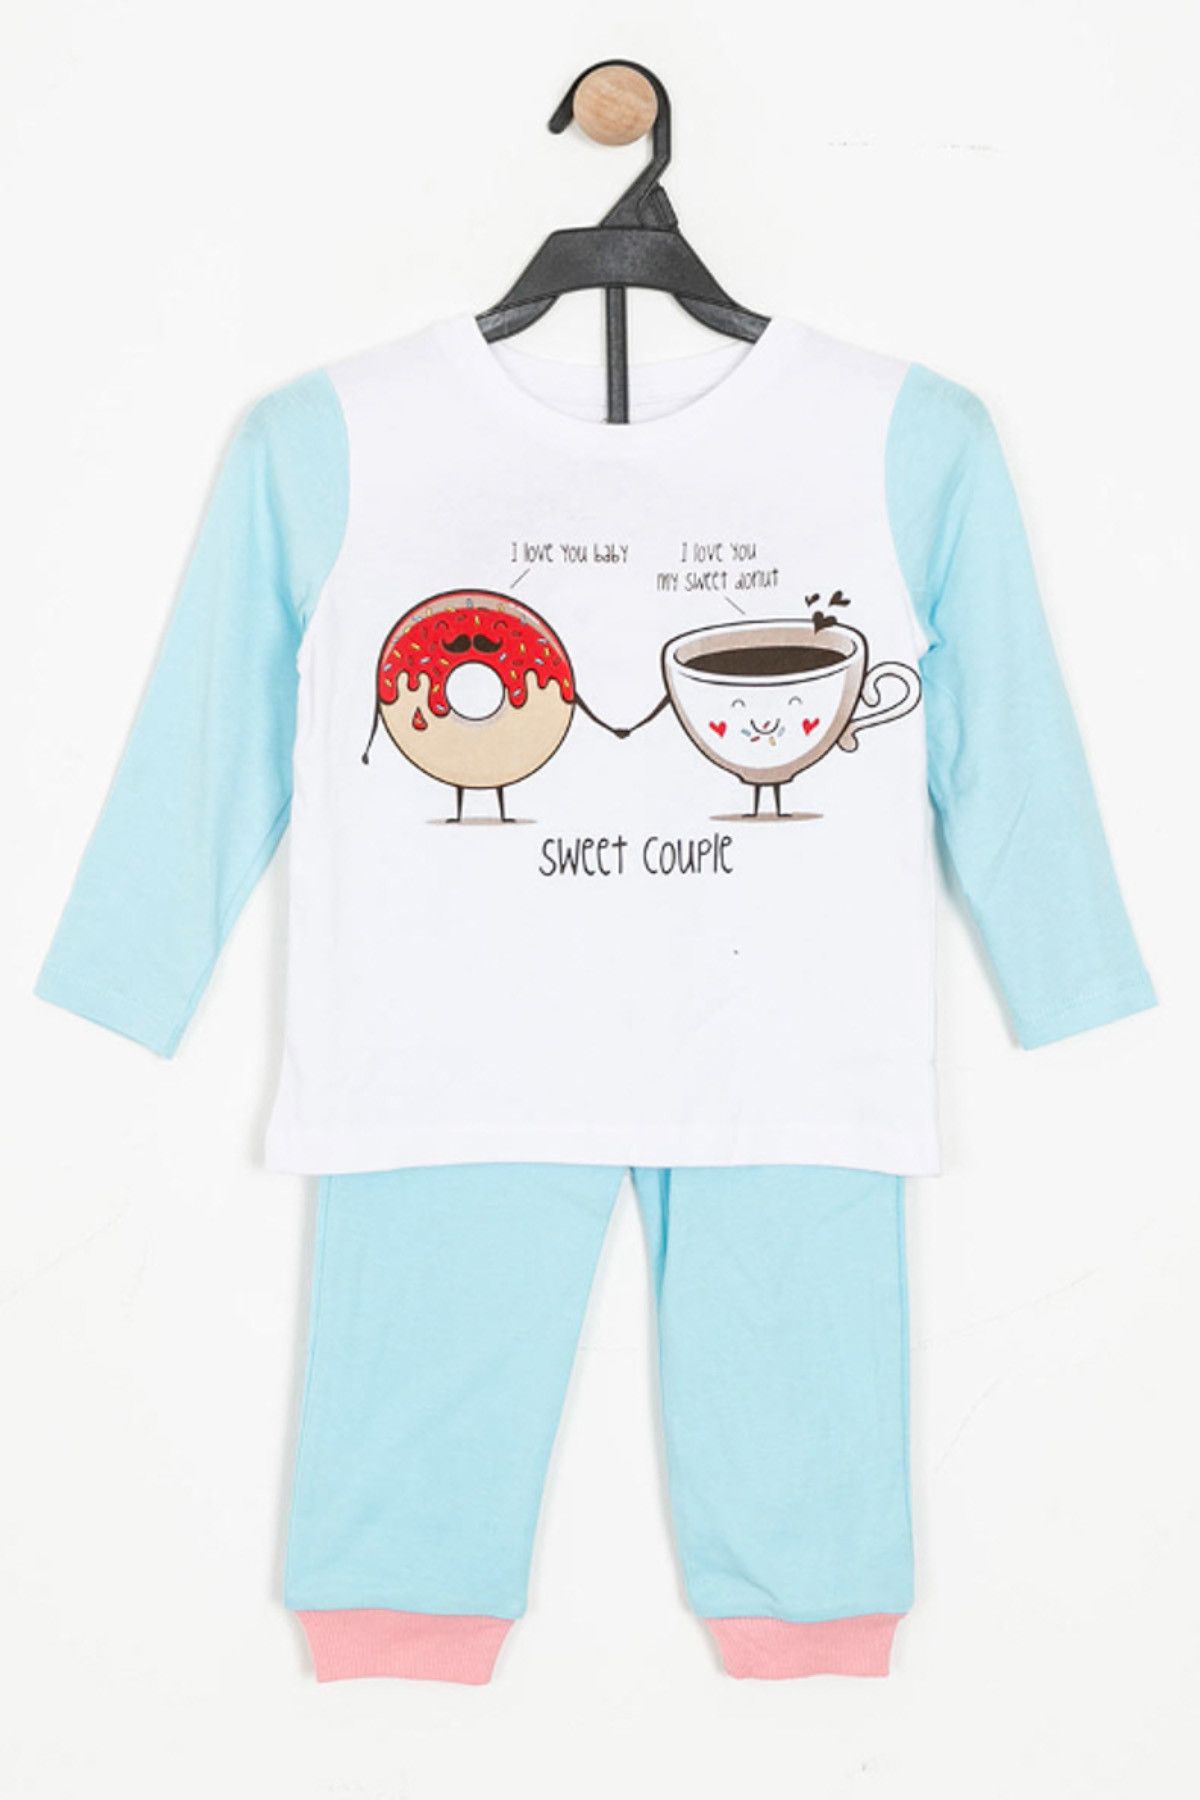 Soobe Mavi Kız Çocuk Pijama Takımı SBDKCPJMS710_00-0048